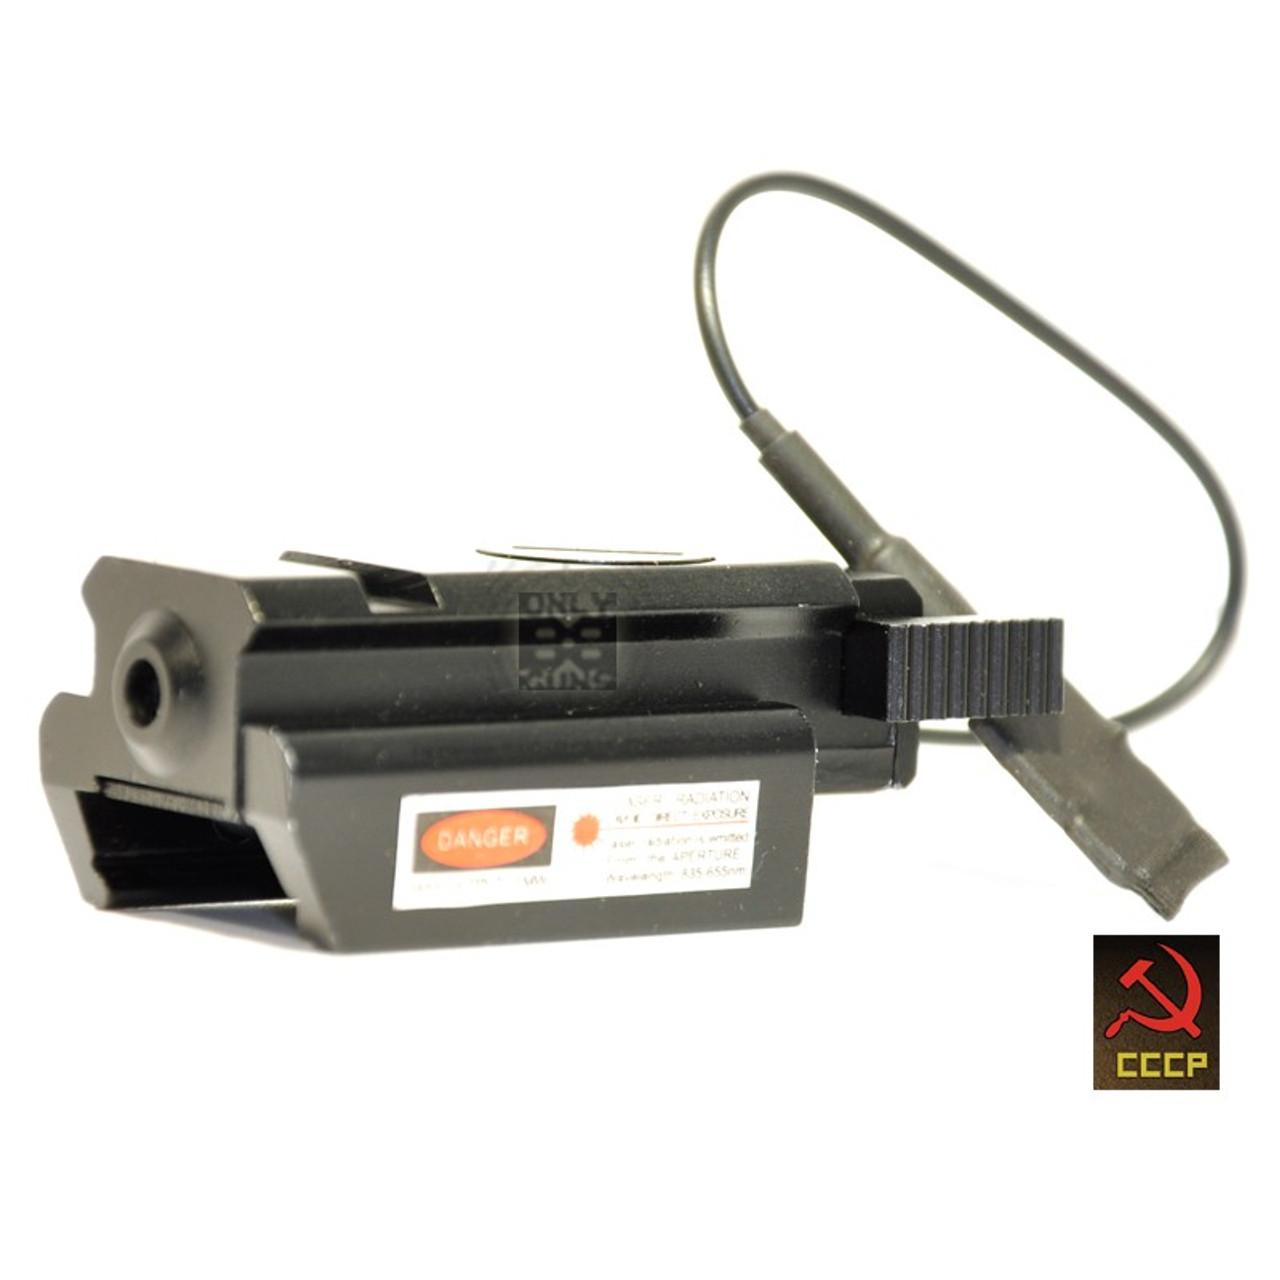 CCCP Pistol Laser (20mm RIS Rail) with Pressure Pad